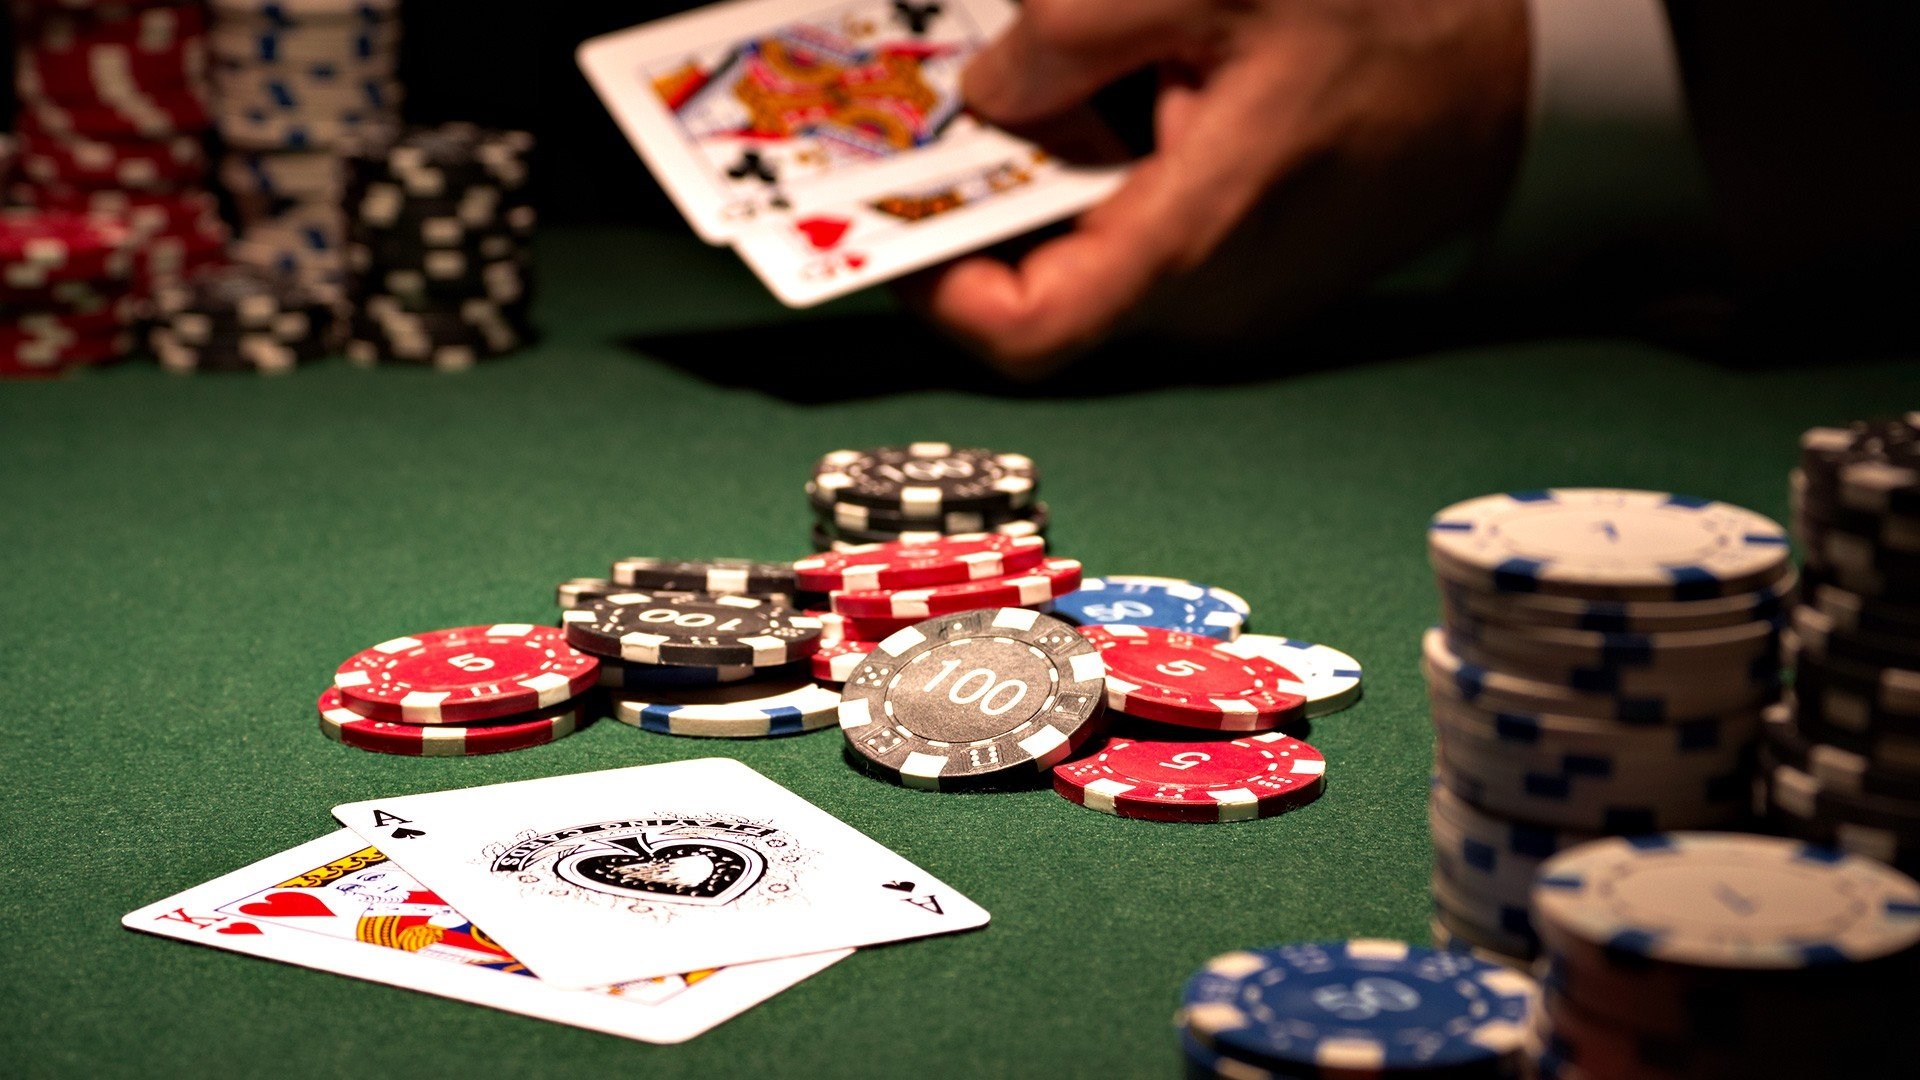 Las vegas online gambling legal